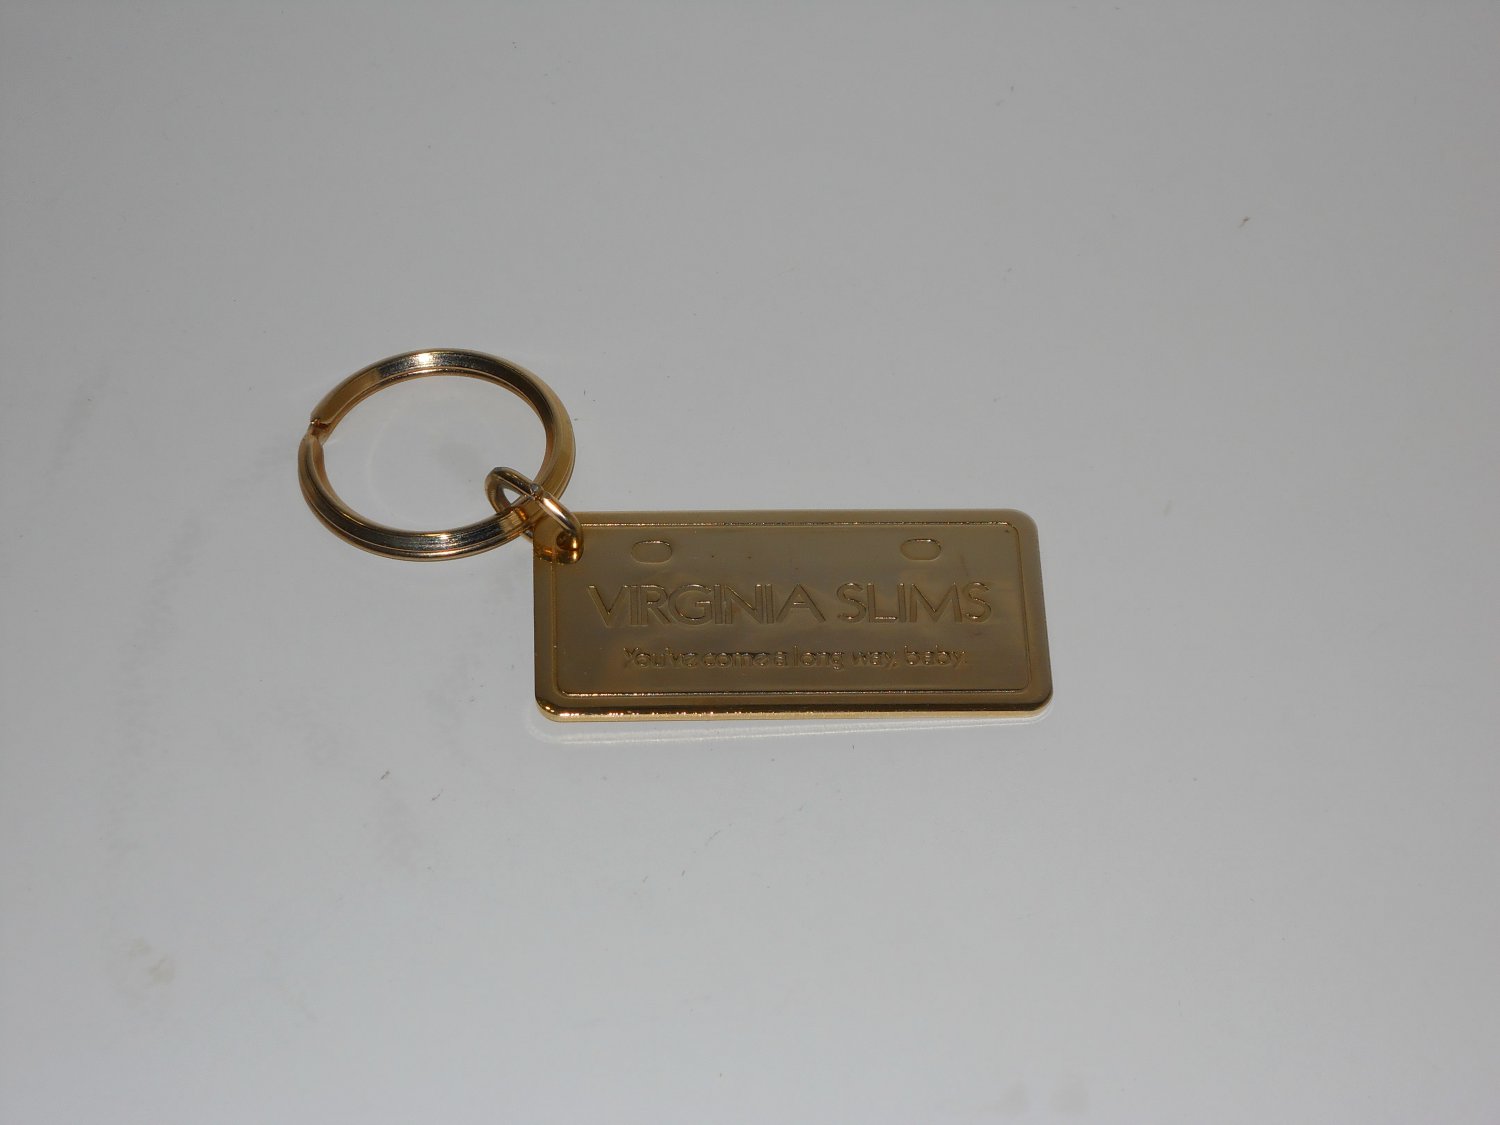 (SOLD) Vintage Virginia Slims Brass License Plate Key Chain